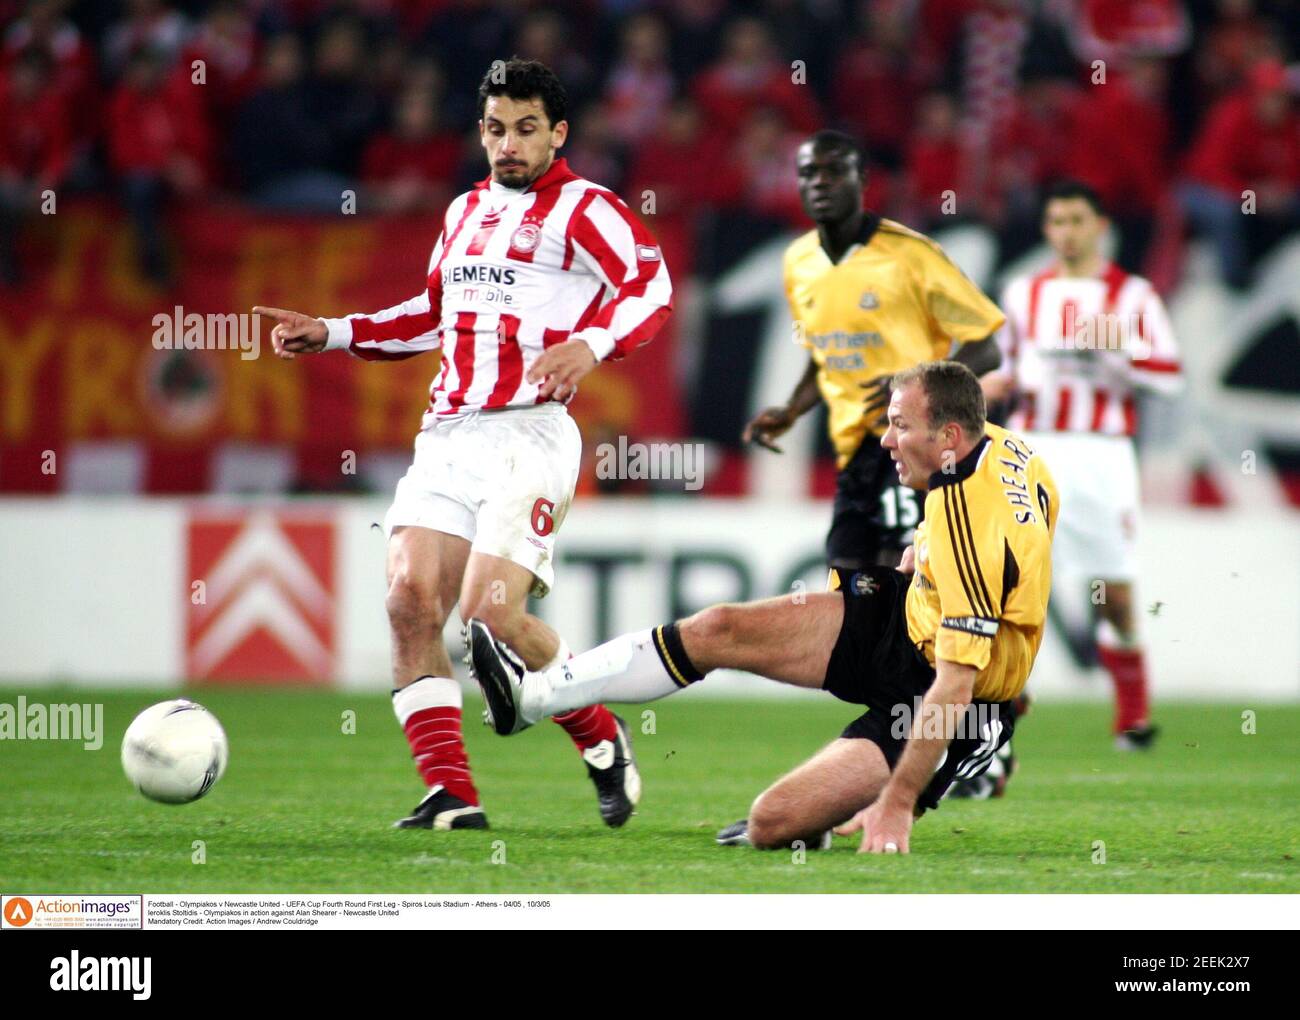 Football - Olympiakos v Newcastle United - UEFA Cup Fourth Round First Leg  - Spiros Louis Stadium - Athens - 04/